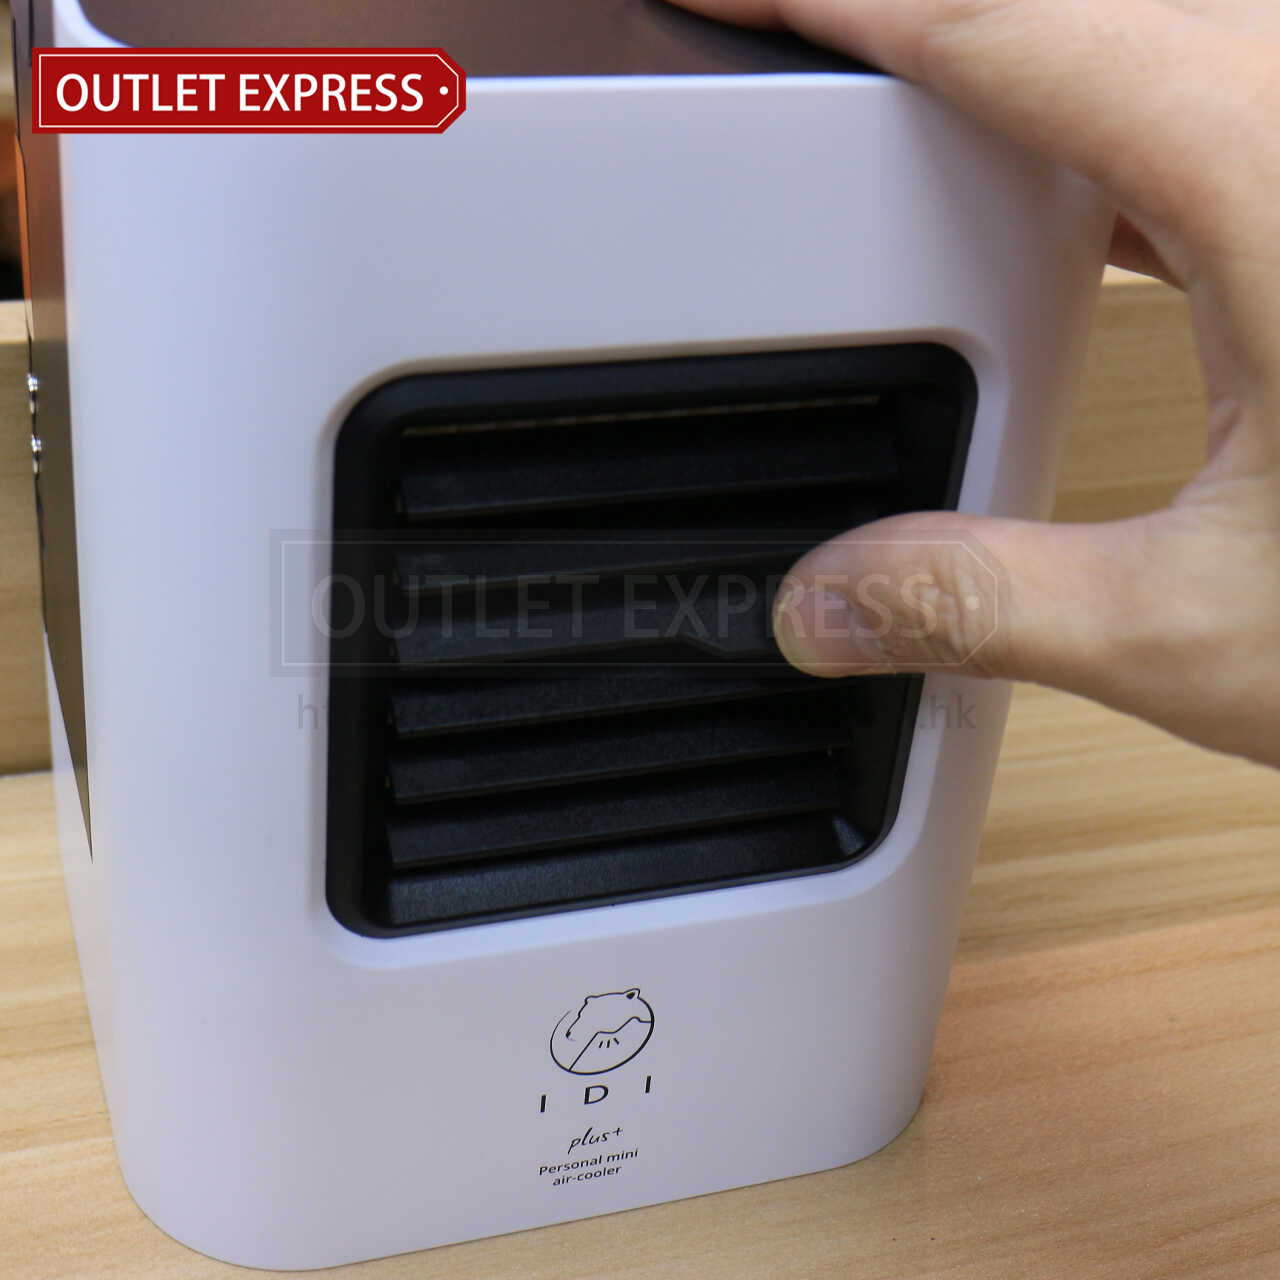 IDI USB 納米攜帶冷風機- Outlet Express HK生活百貨城實拍相片